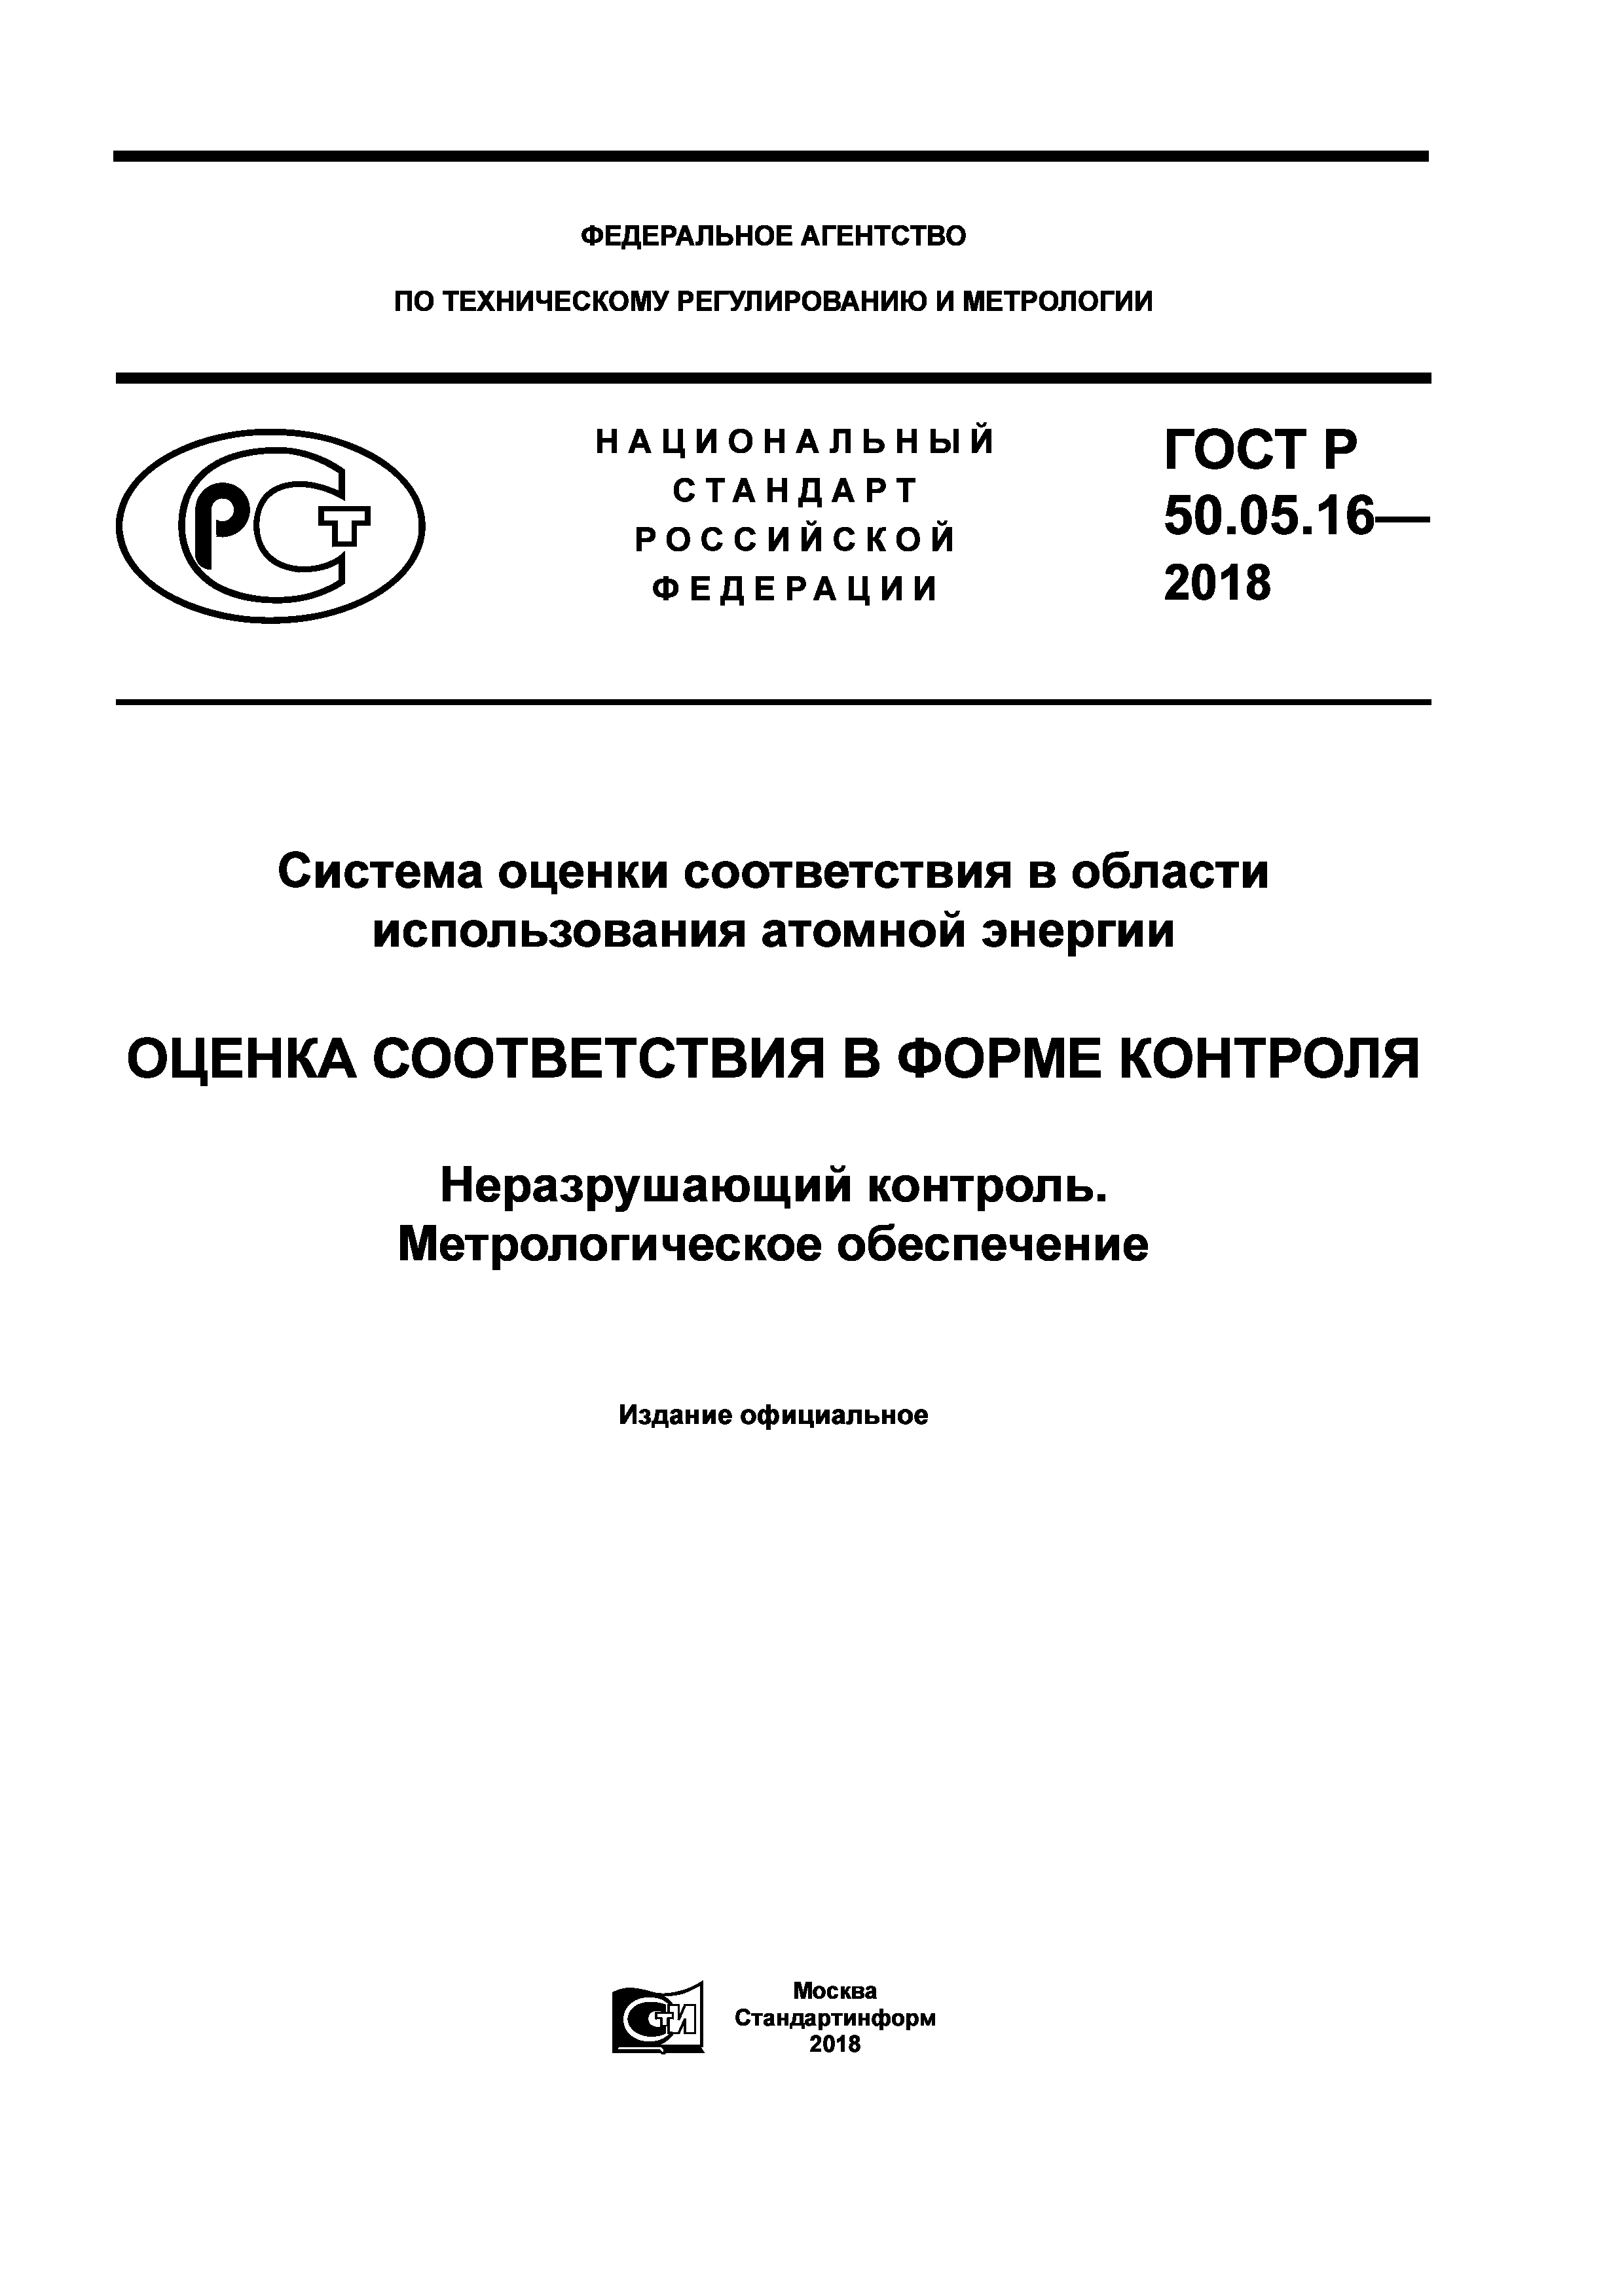 ГОСТ Р 50.05.16-2018